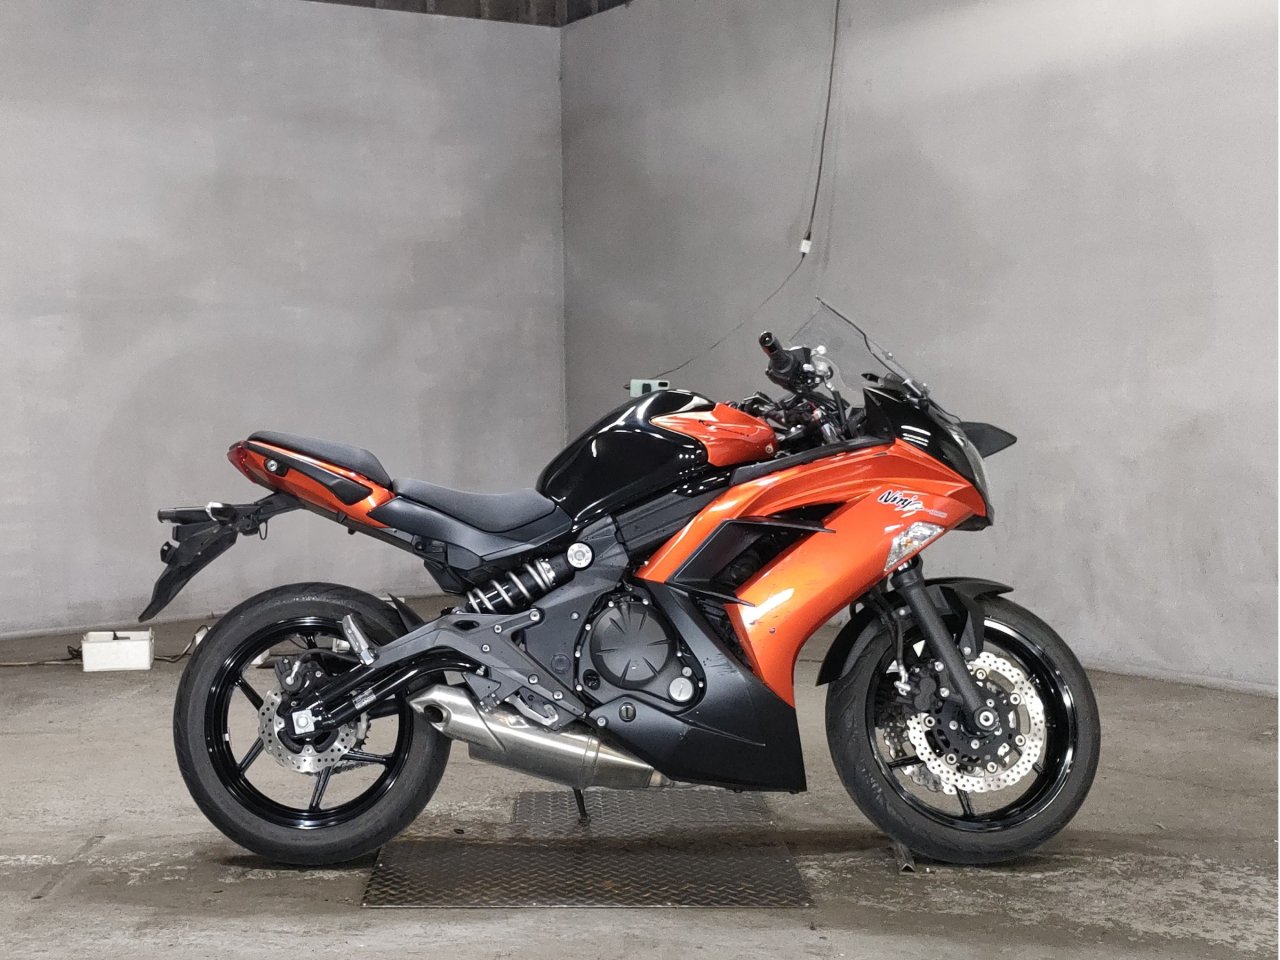 Kawasaki Ninja 400 - Adamoto - Motorcycles from Japan